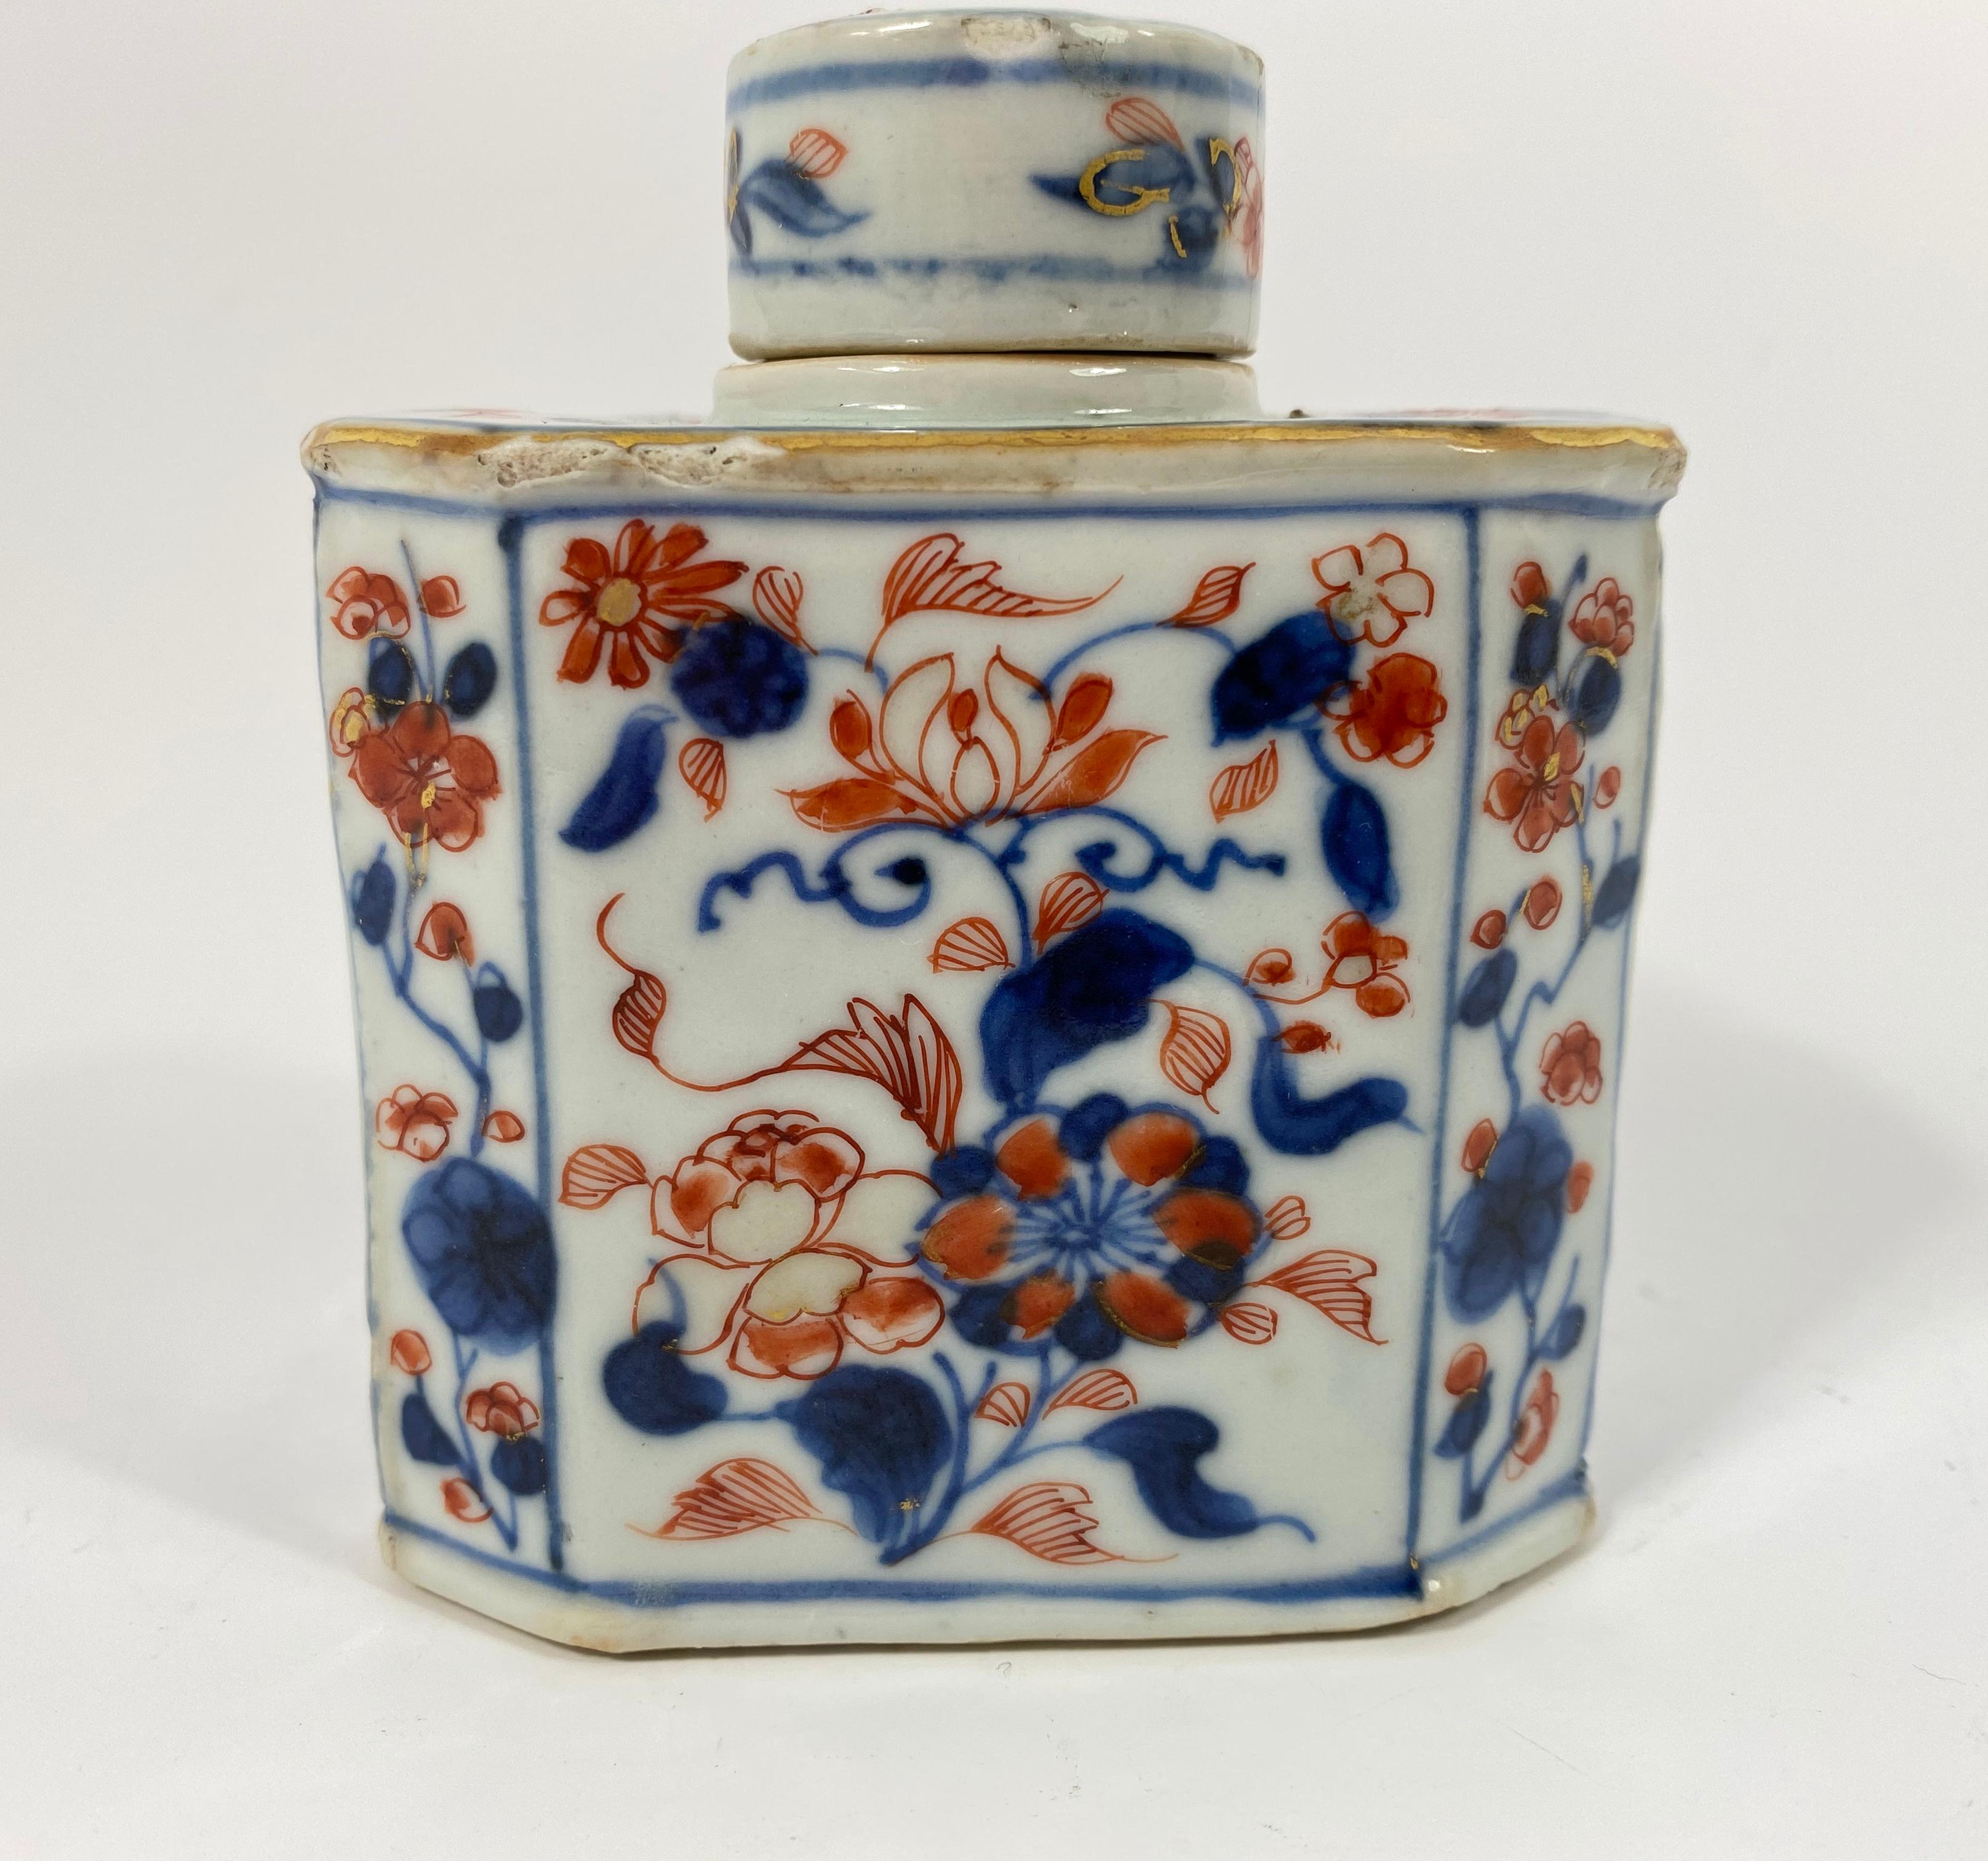 Porcelain Chinese Imari Tea Caddy and Cover, circa 1700, Kangxi Period